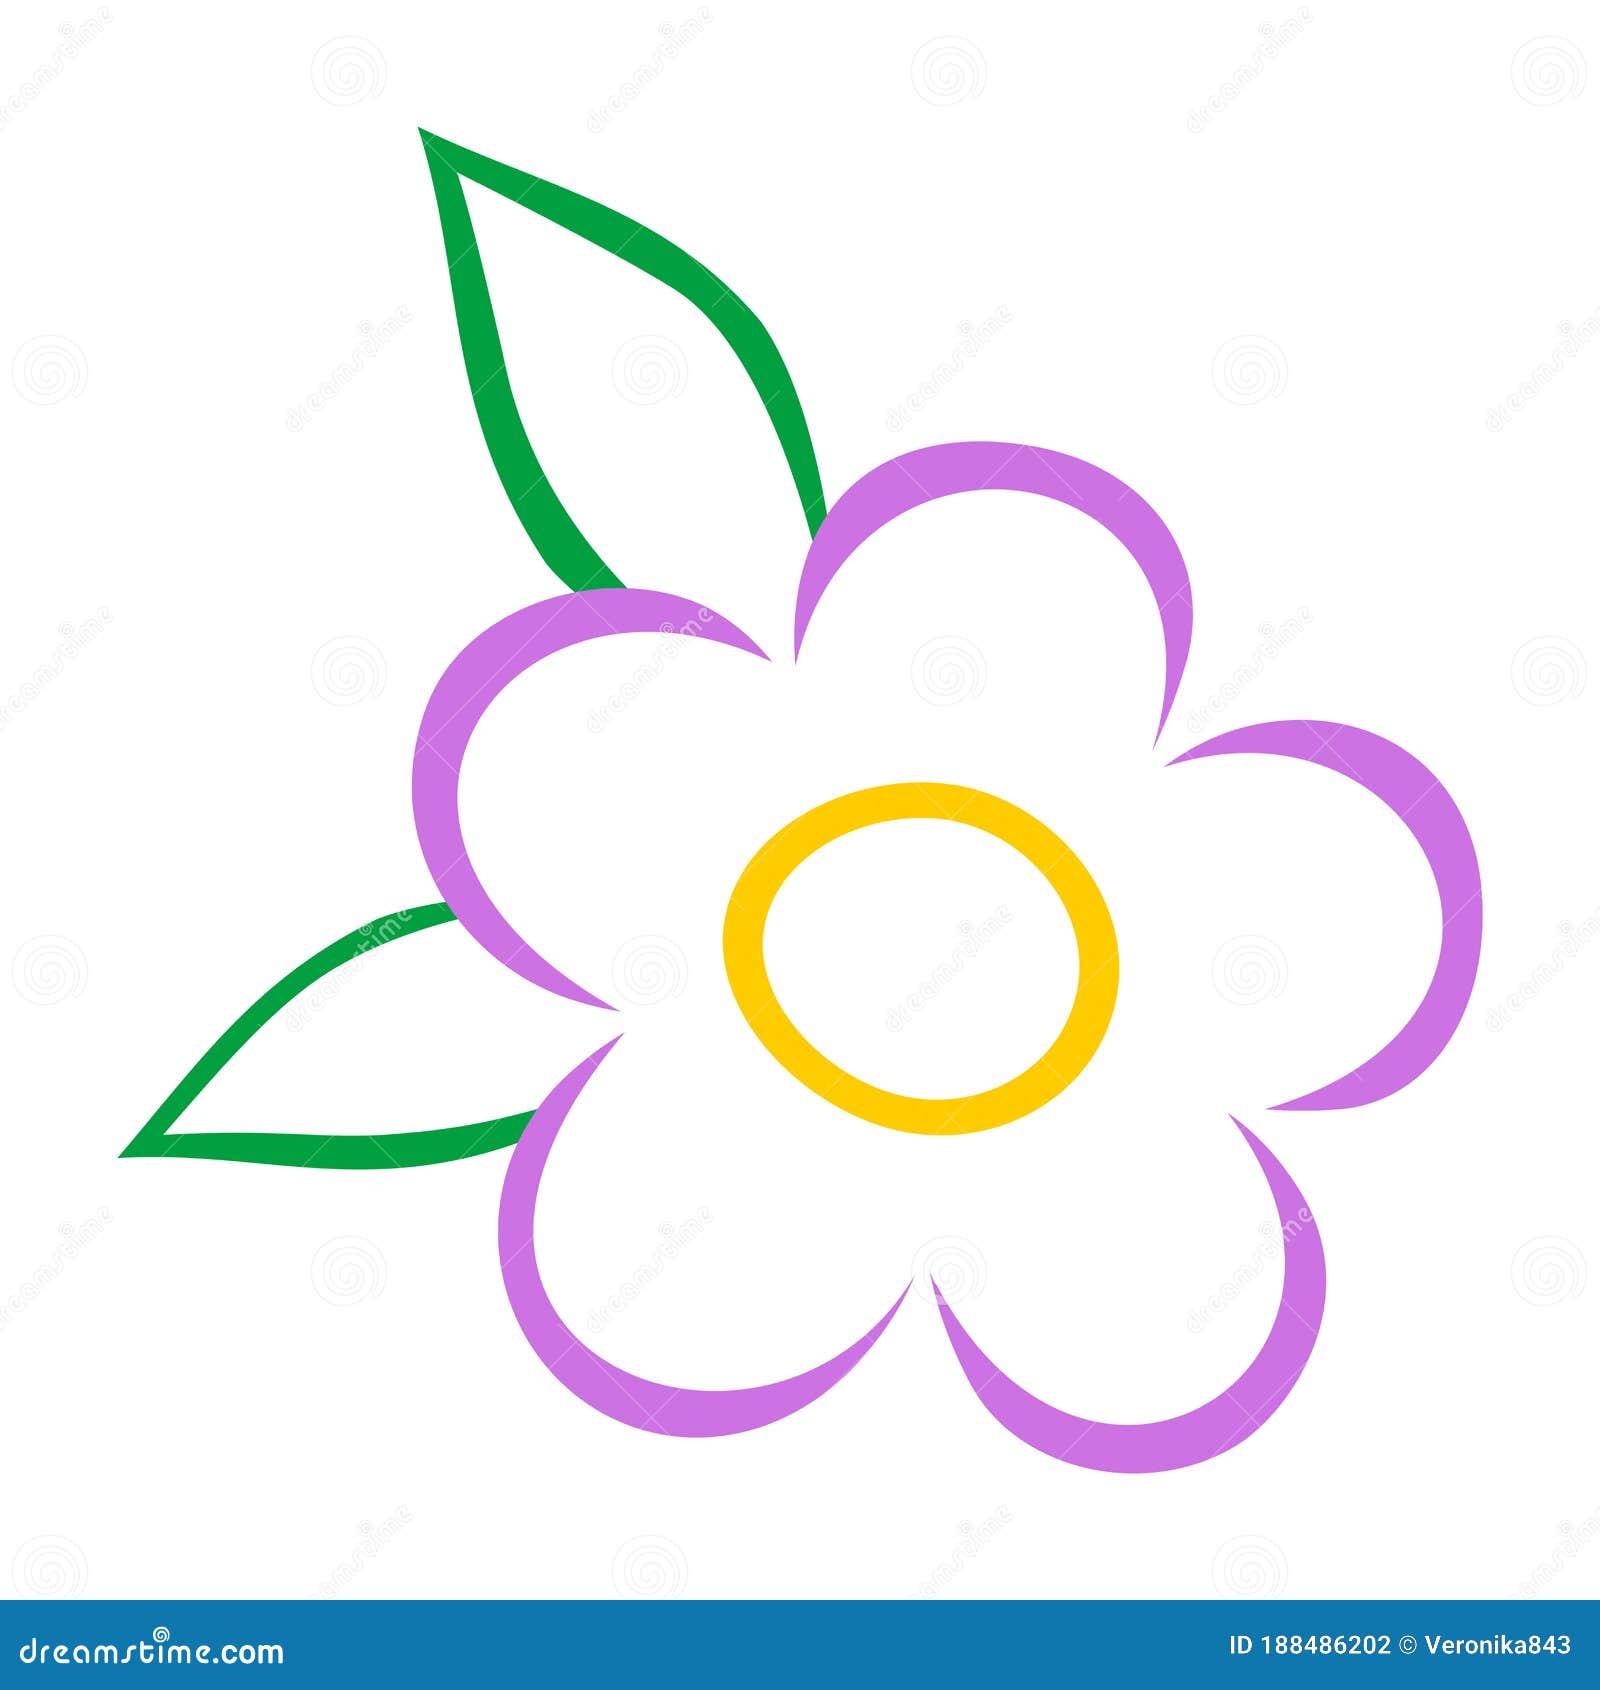 Violet Flower with Leaves Outline Icon. Bloom Vector Illustration